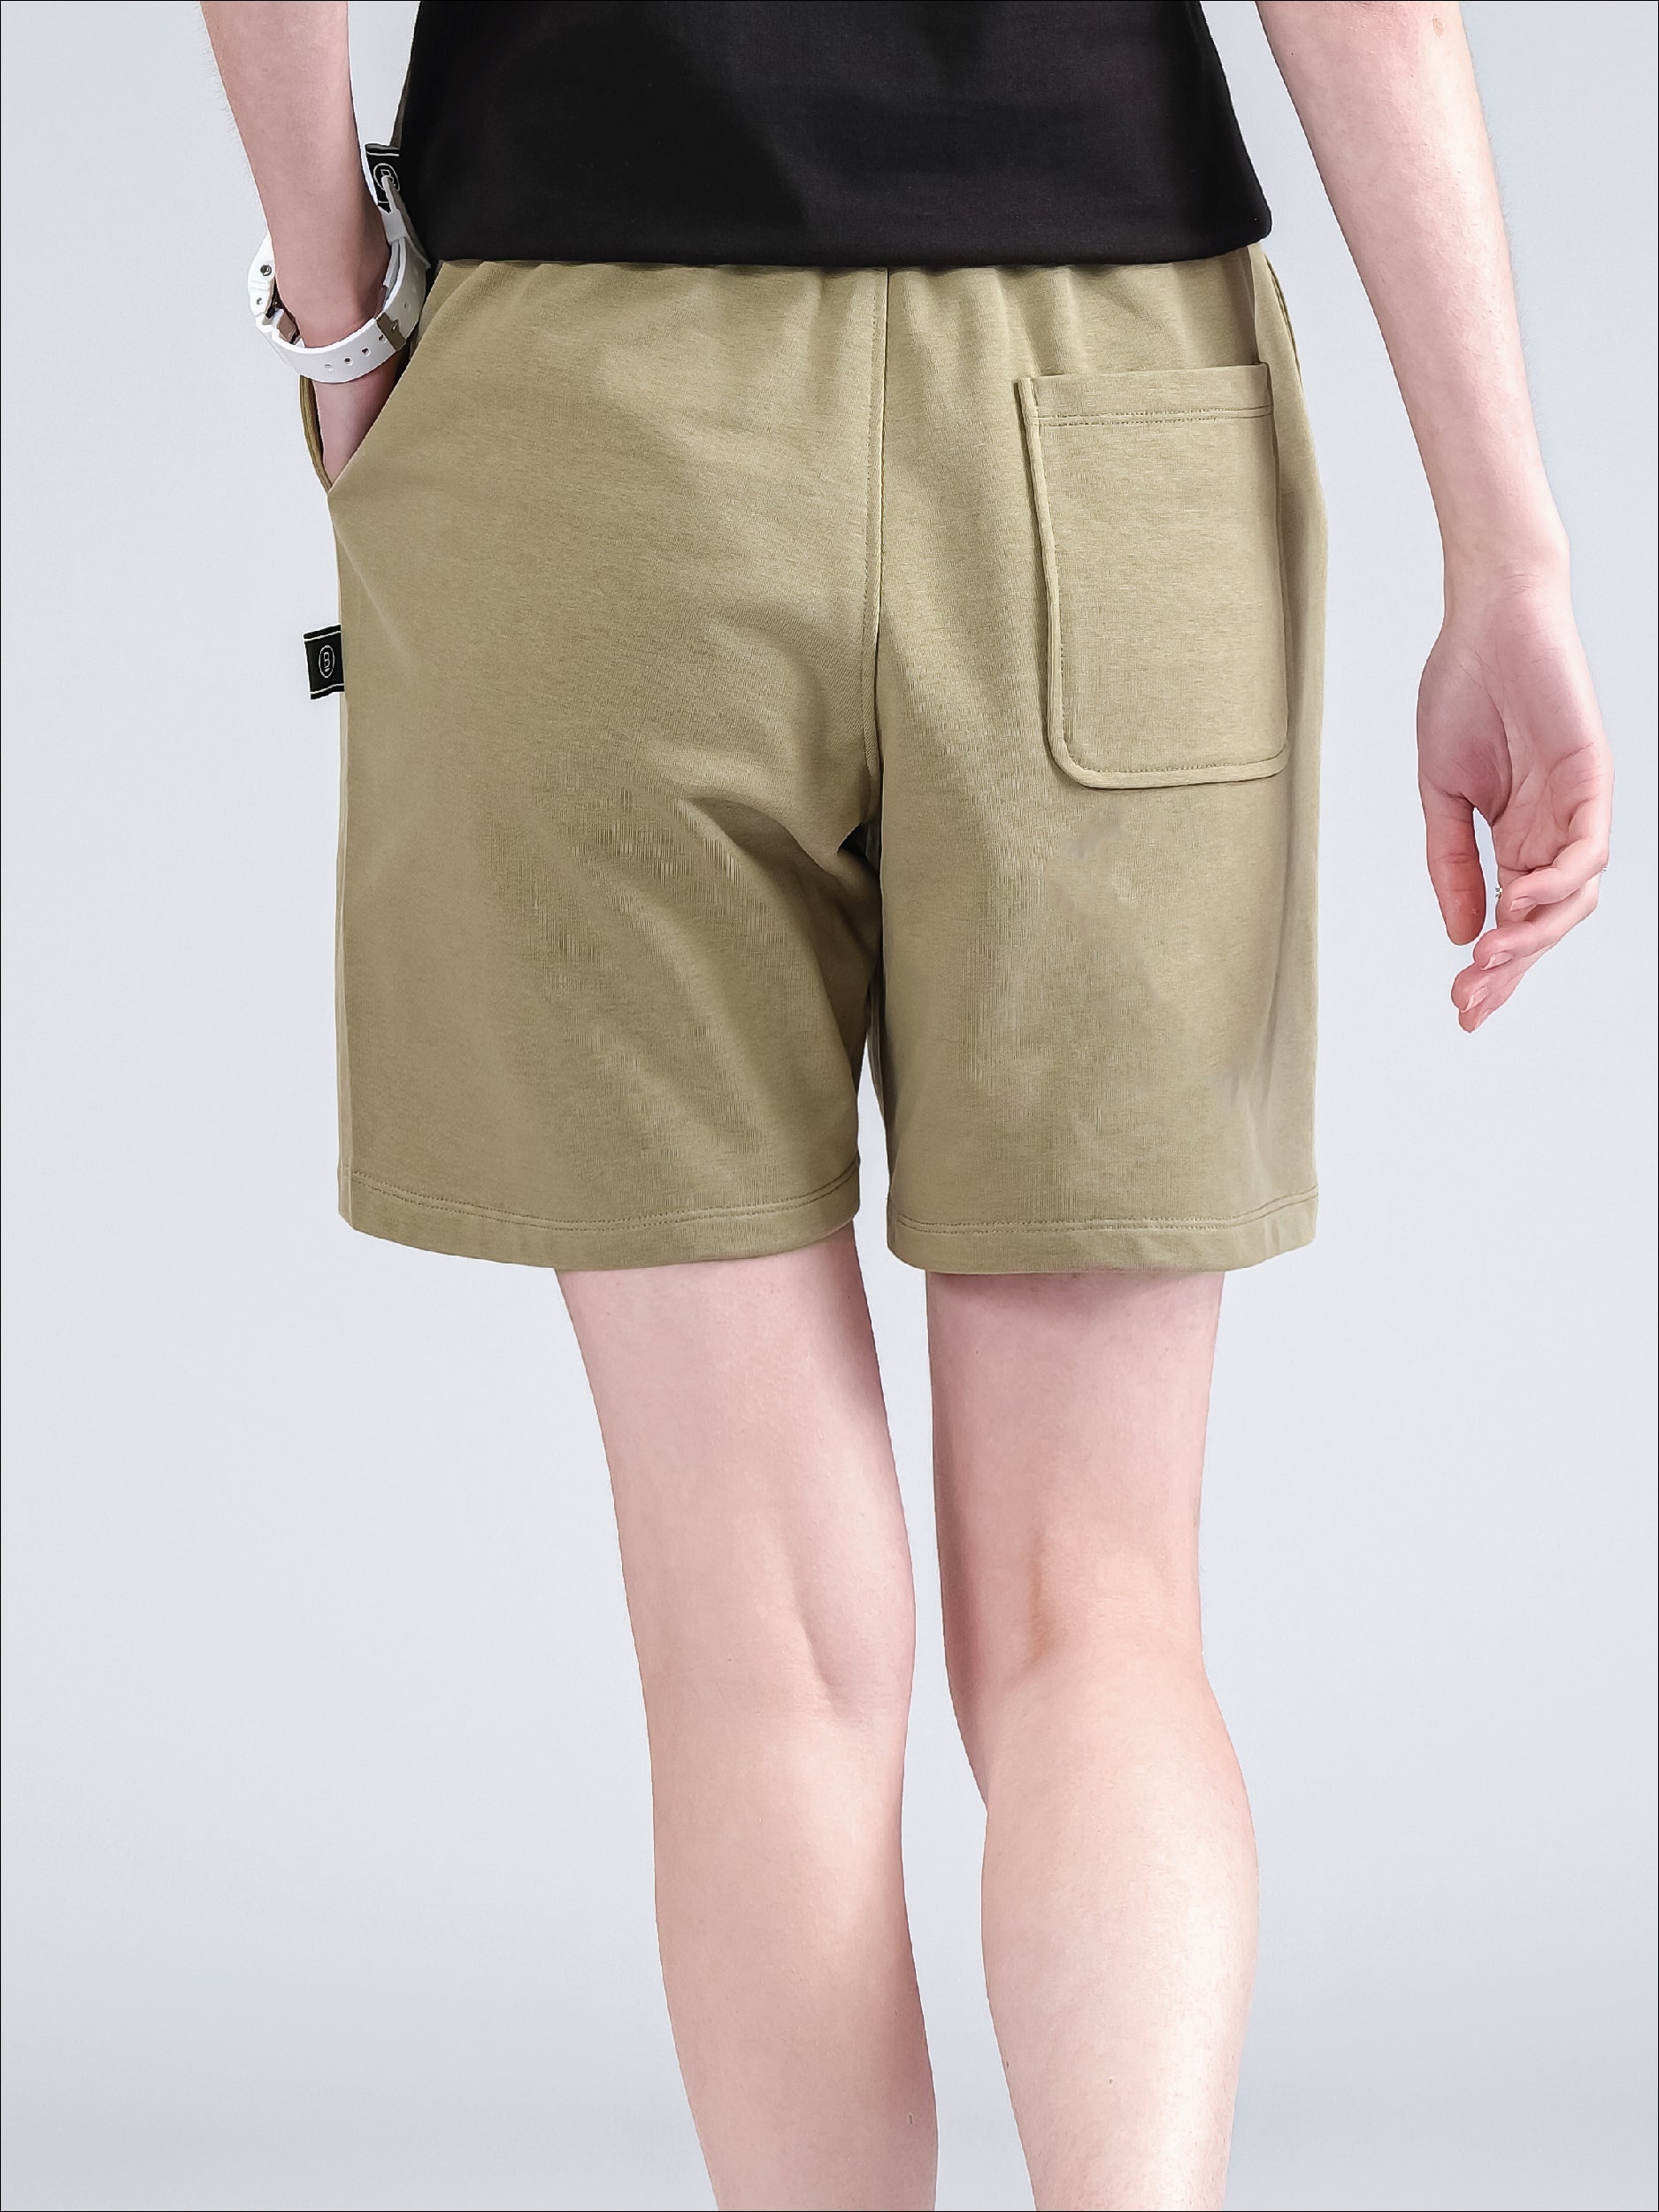 Japanese Sweet Women Slim Wide Leg Denim High Waist Shorts Girl Cute Short  Pants | eBay